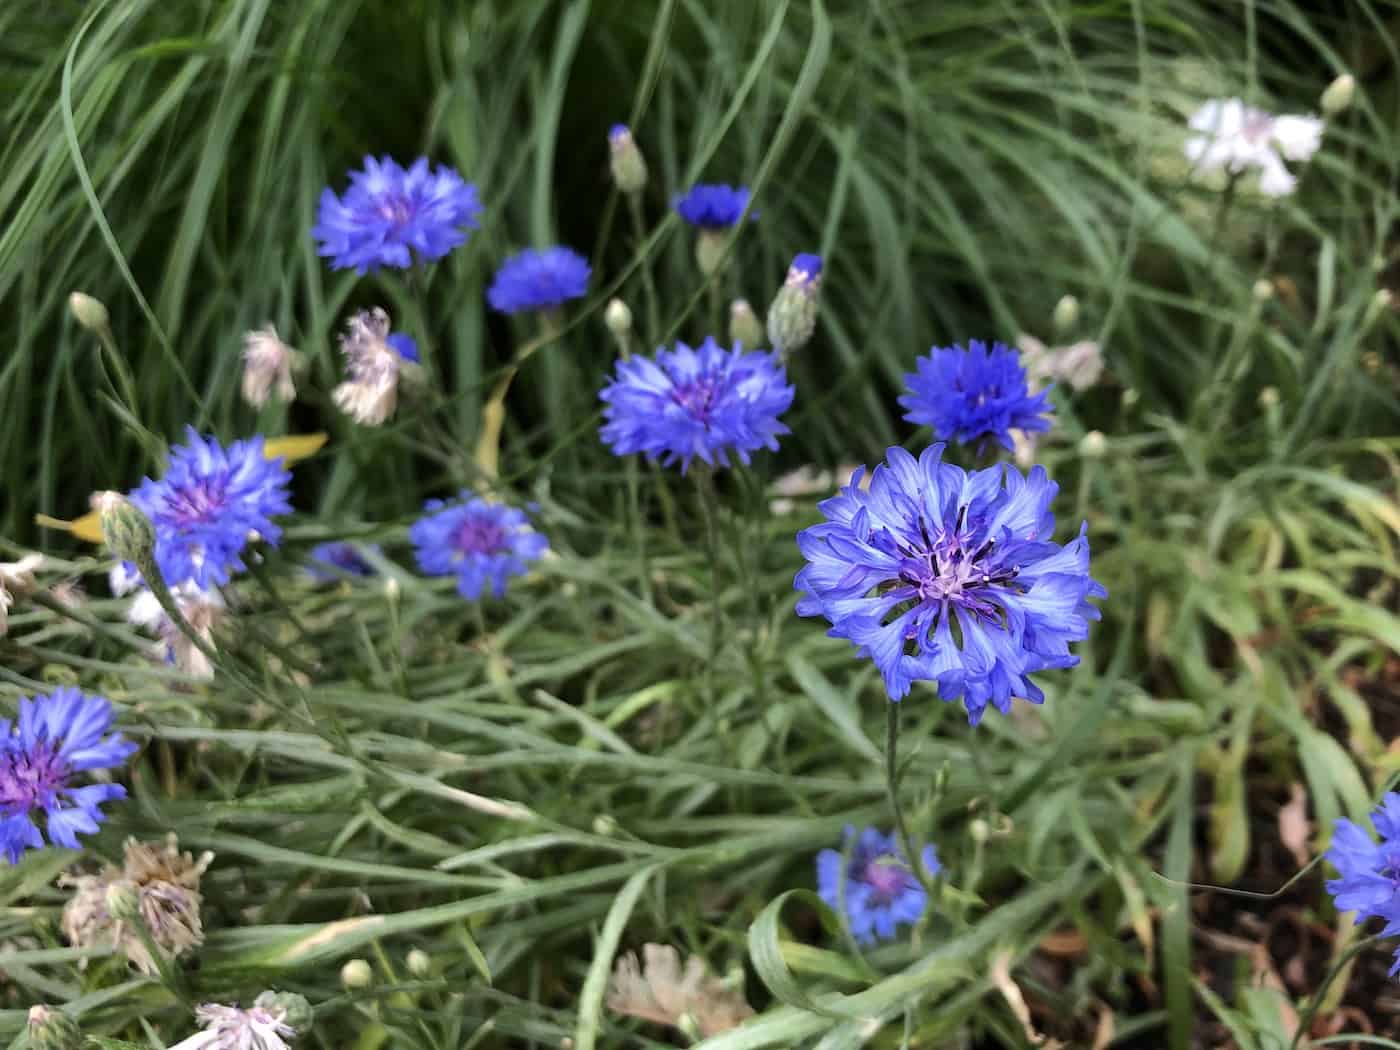 Blue boy cornflowers